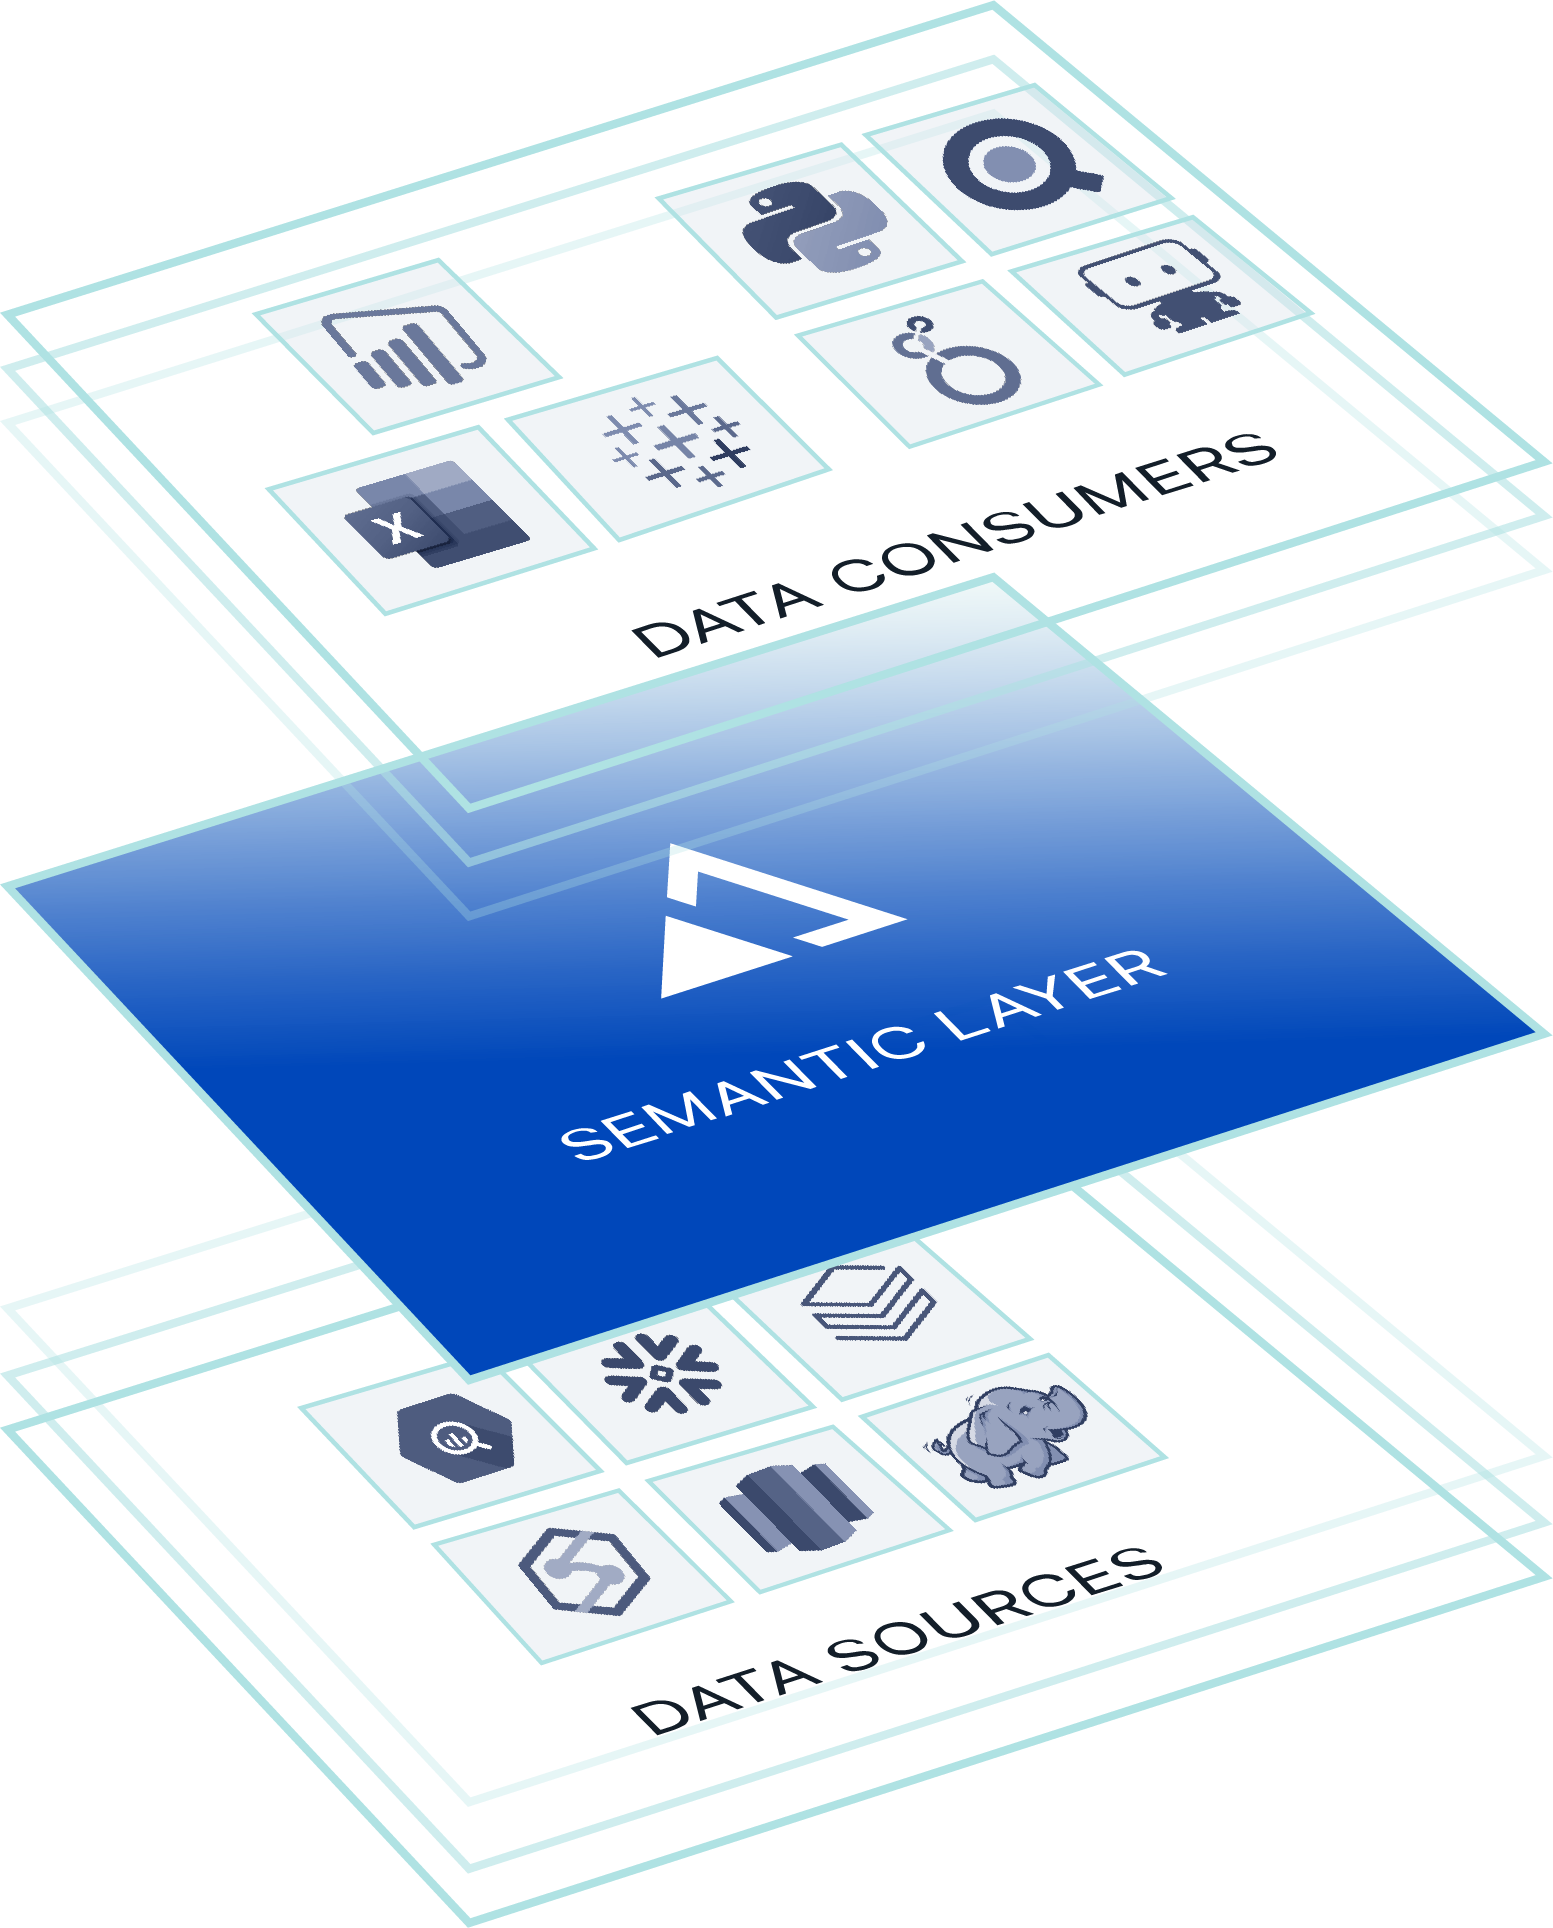 AtScale semantic layer